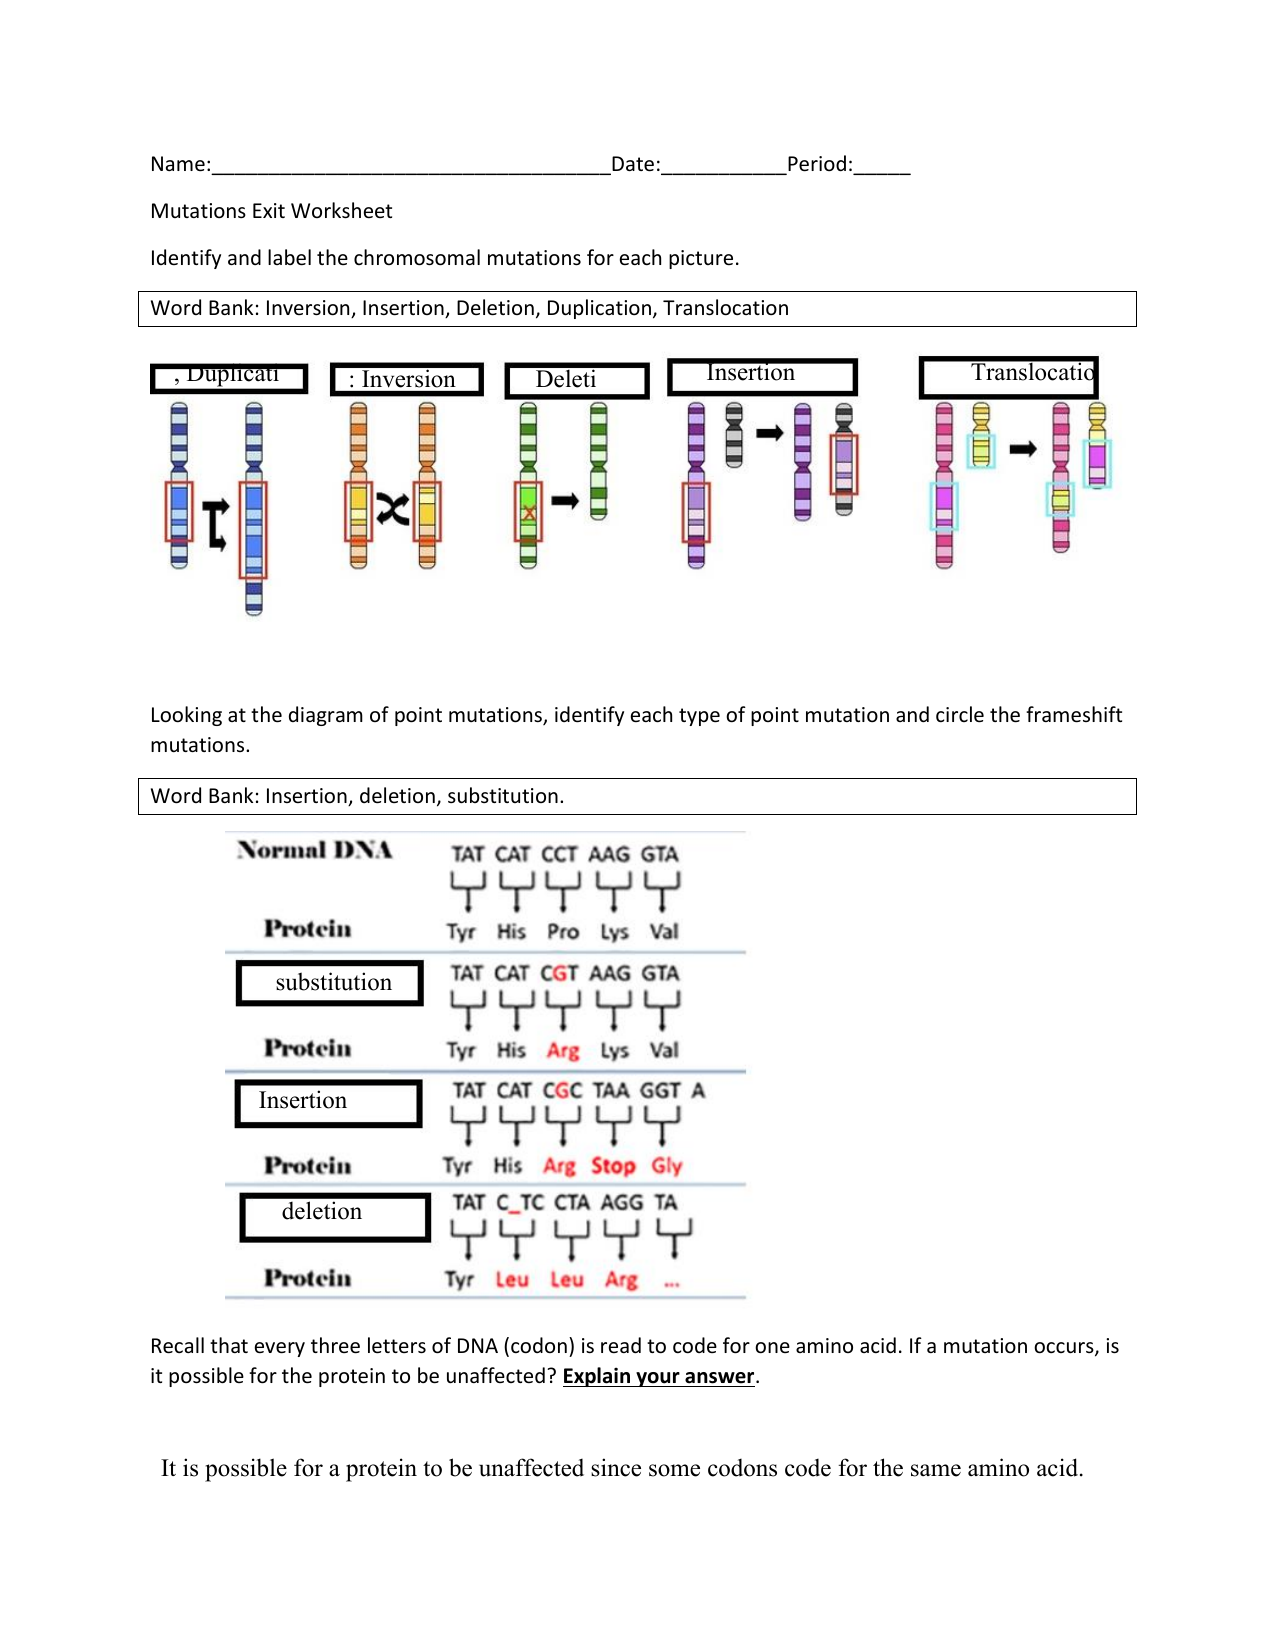 Mutations-Exit-Worksheet (22) In Gene And Chromosome Mutation Worksheet